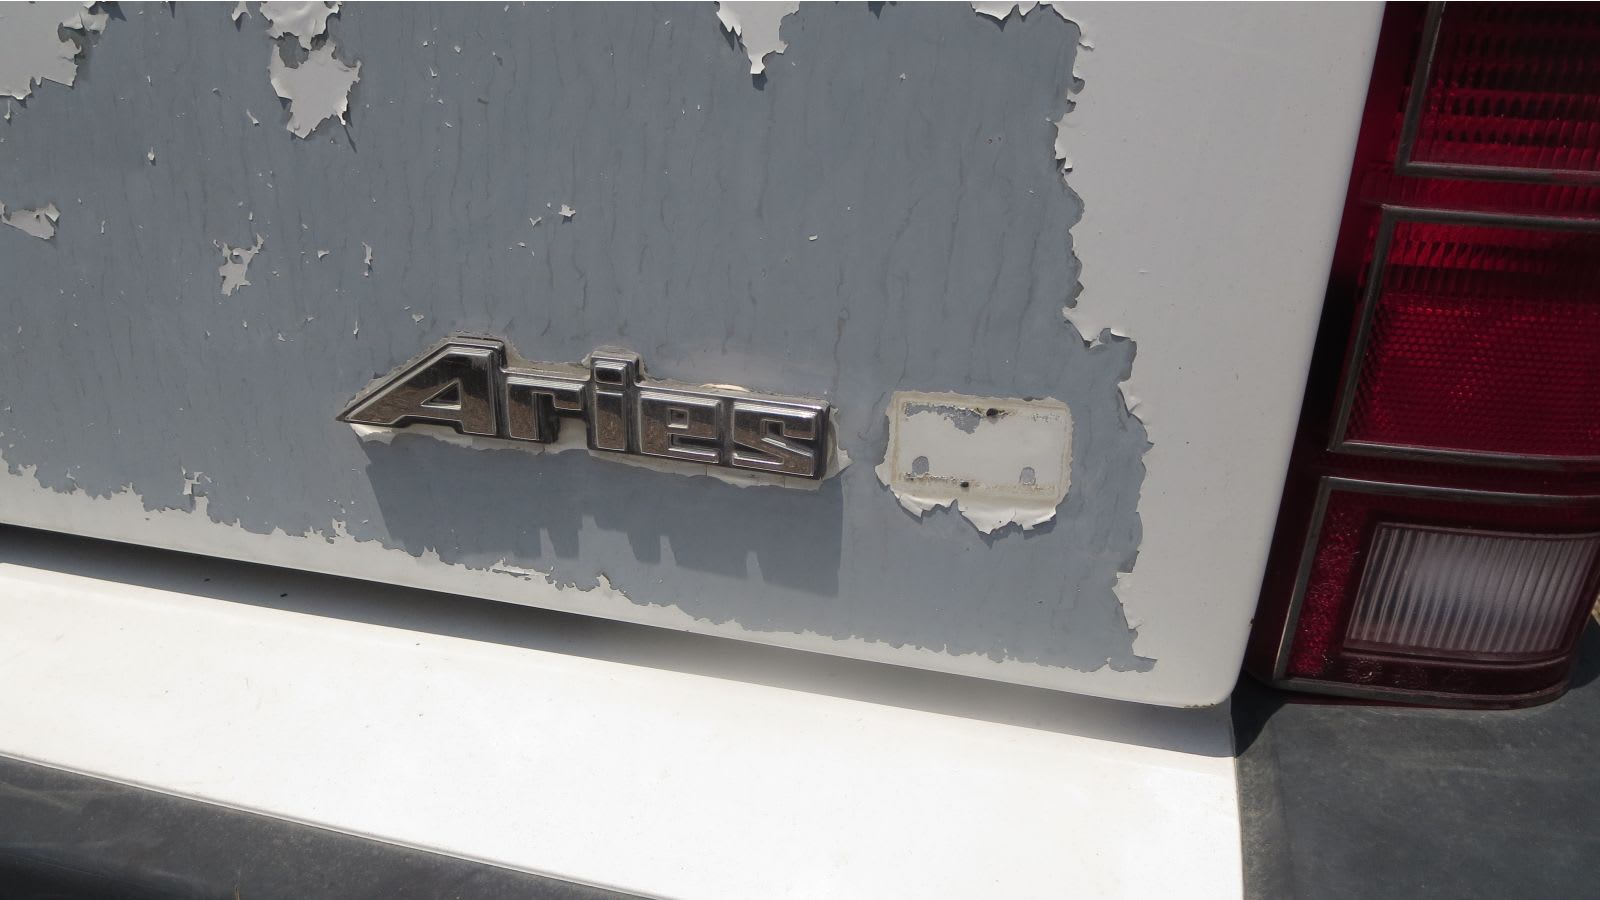 Junked 1988 Dodge Aries wagon